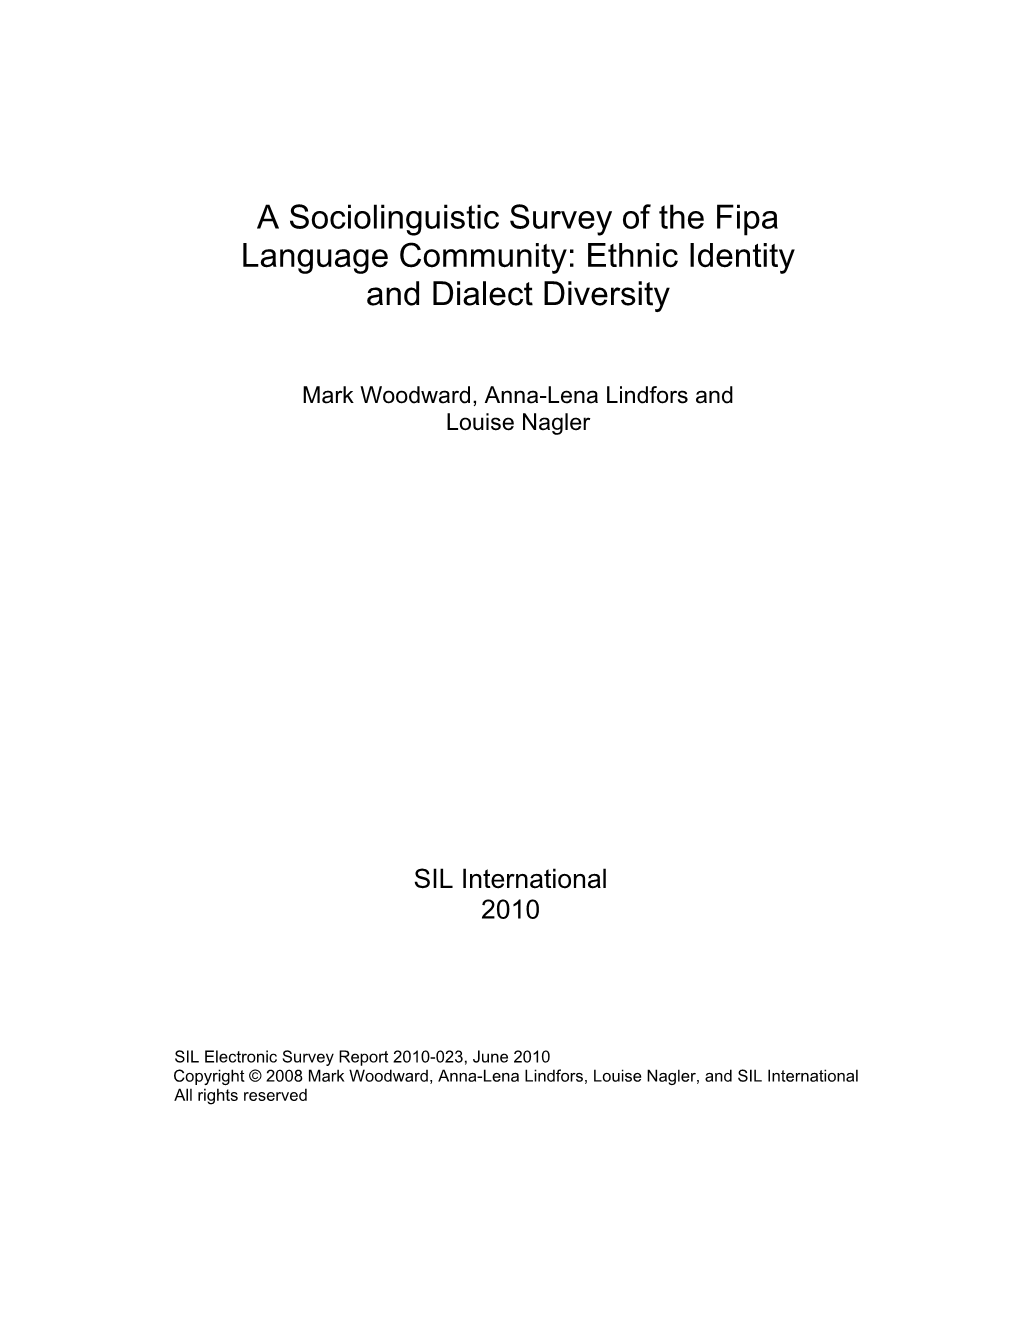 A Sociolinguistic Survey of the Fipa Language Community: Ethnic Identity